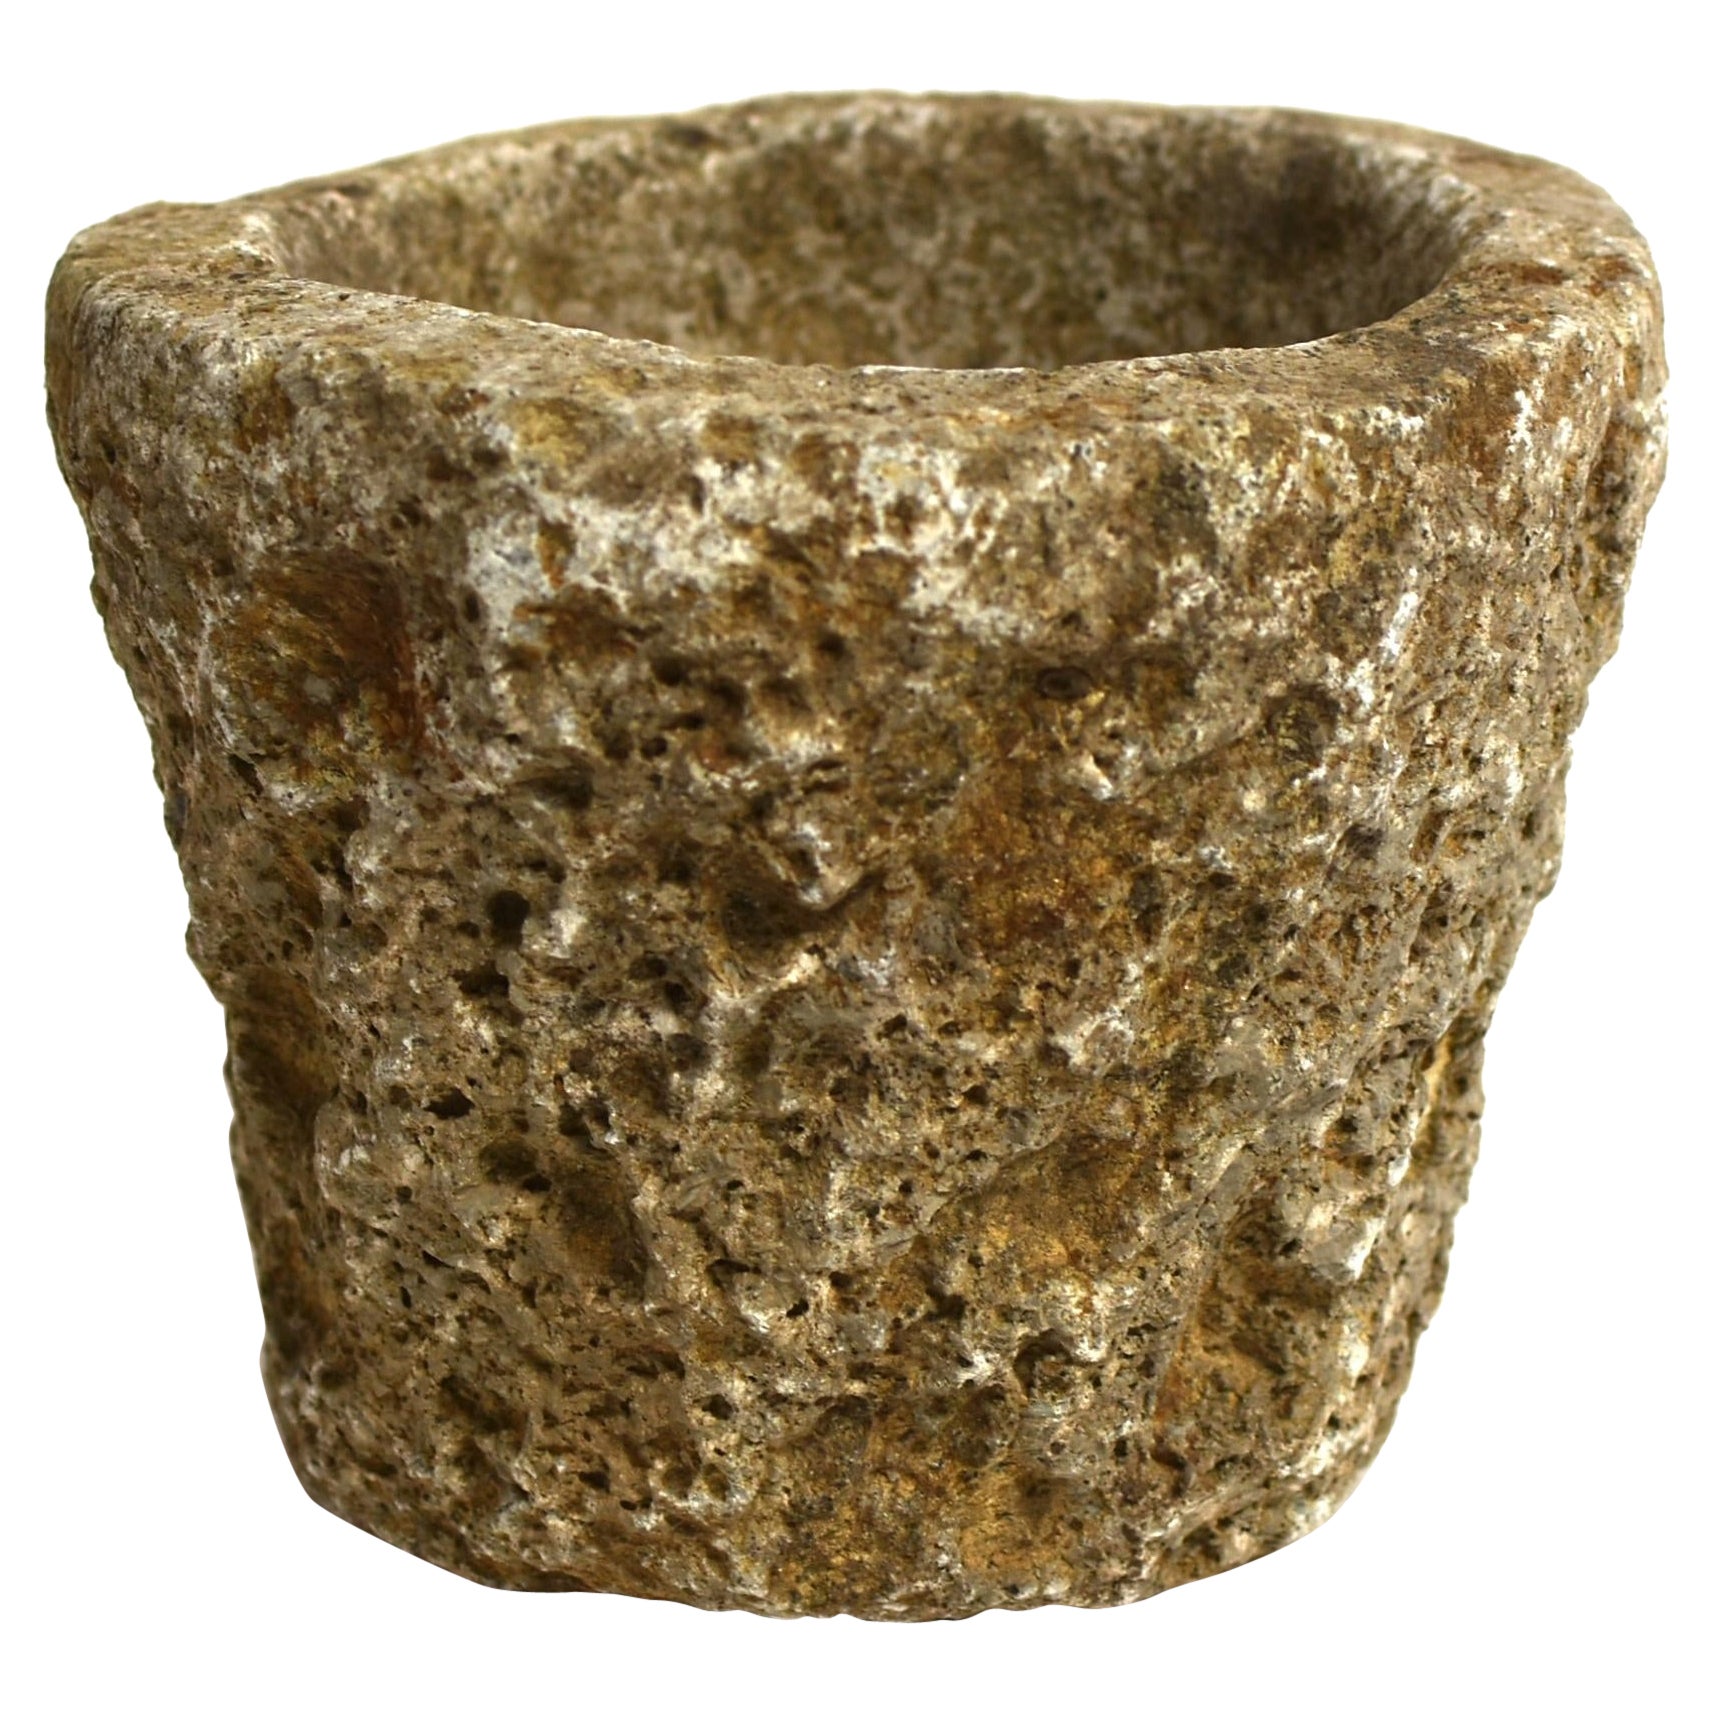 Kalksteinschale-Mortar-Pflanzgefäß aus dem 18. Jahrhundert, 7 lbs